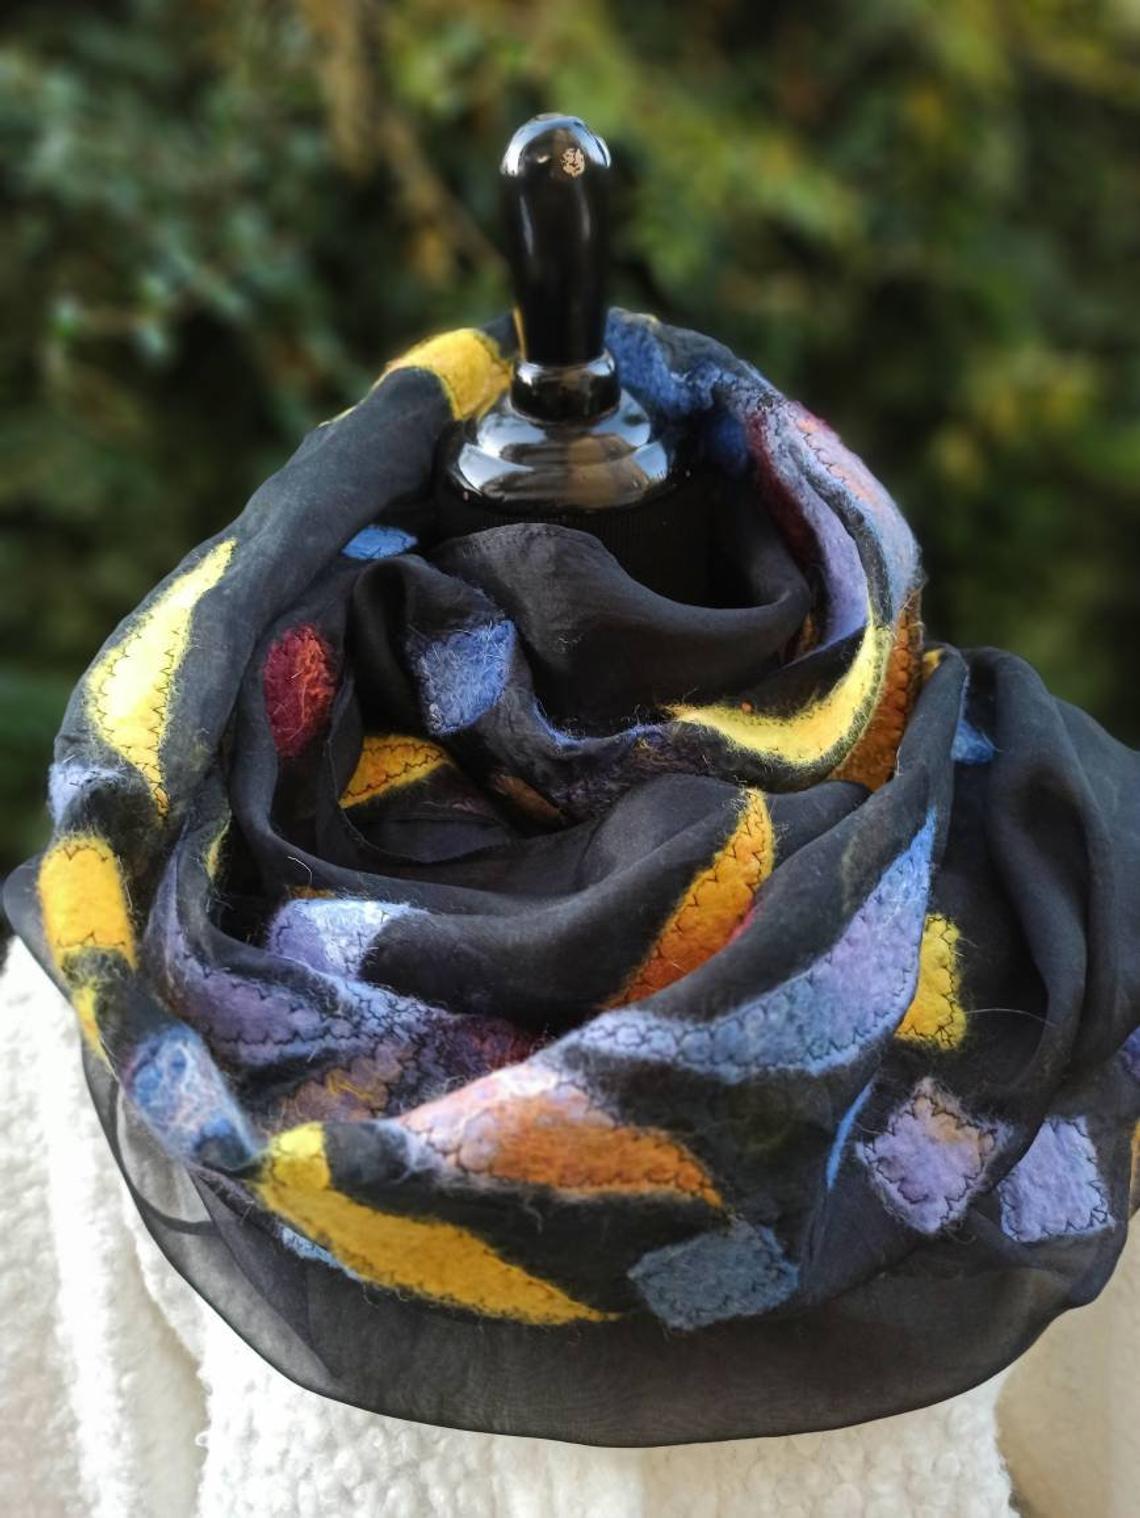 Autumn blues nunofelt silk organza and Merino wool scarf. Elegance of black organza and Merino wool fibers. Original accessory.